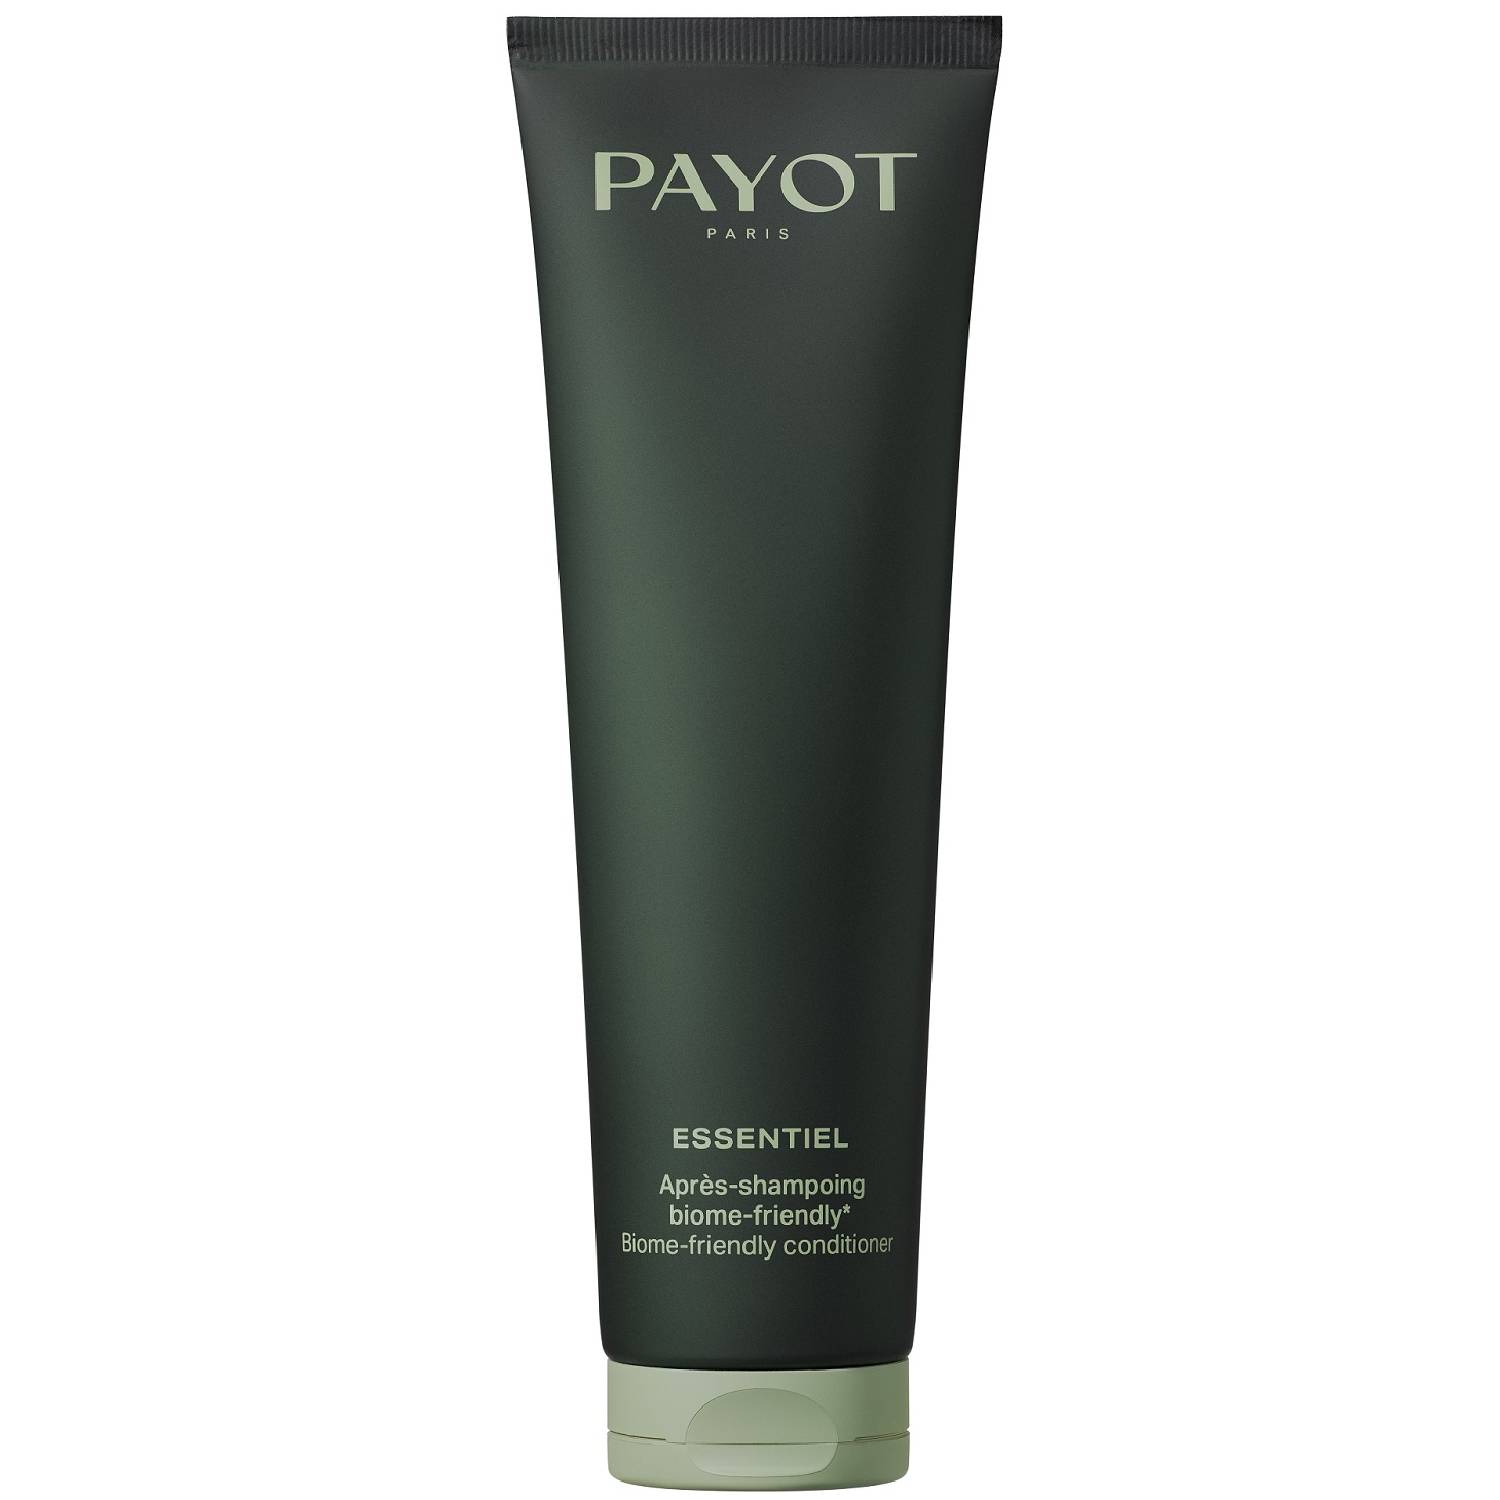 Payot Восстанавливающий кондиционер, благоприятный для микробиома After-Shampoing Biome-Friendly Conditioner, 150 мл (Payot, Essentiel) payot essentiel biome friendly solid shampoo